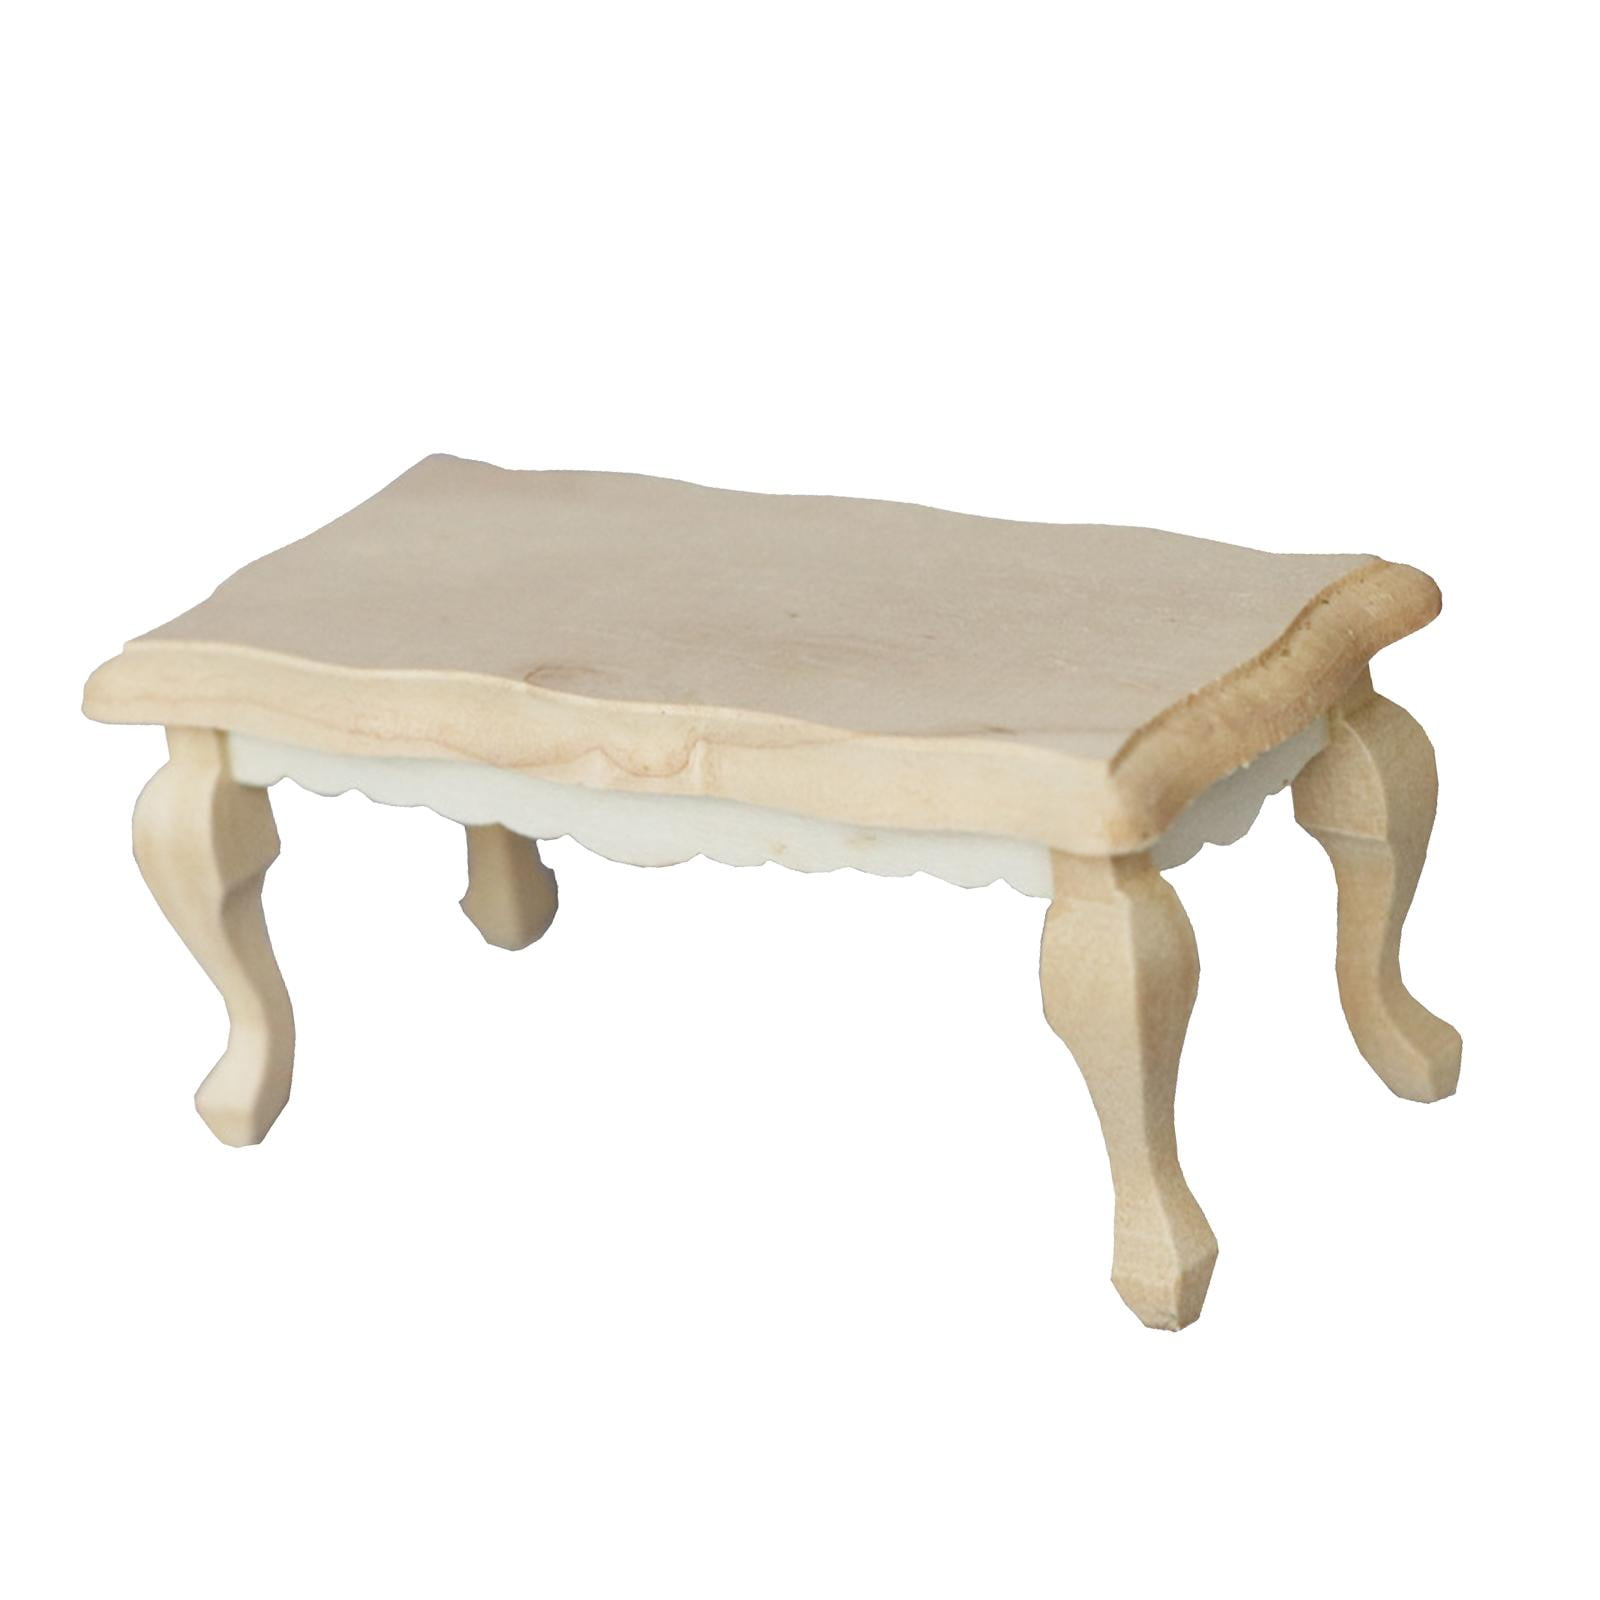 White Wood Furniture Garden Room Round Tea Coffee Table Desk for 1:12 Dollhouse 